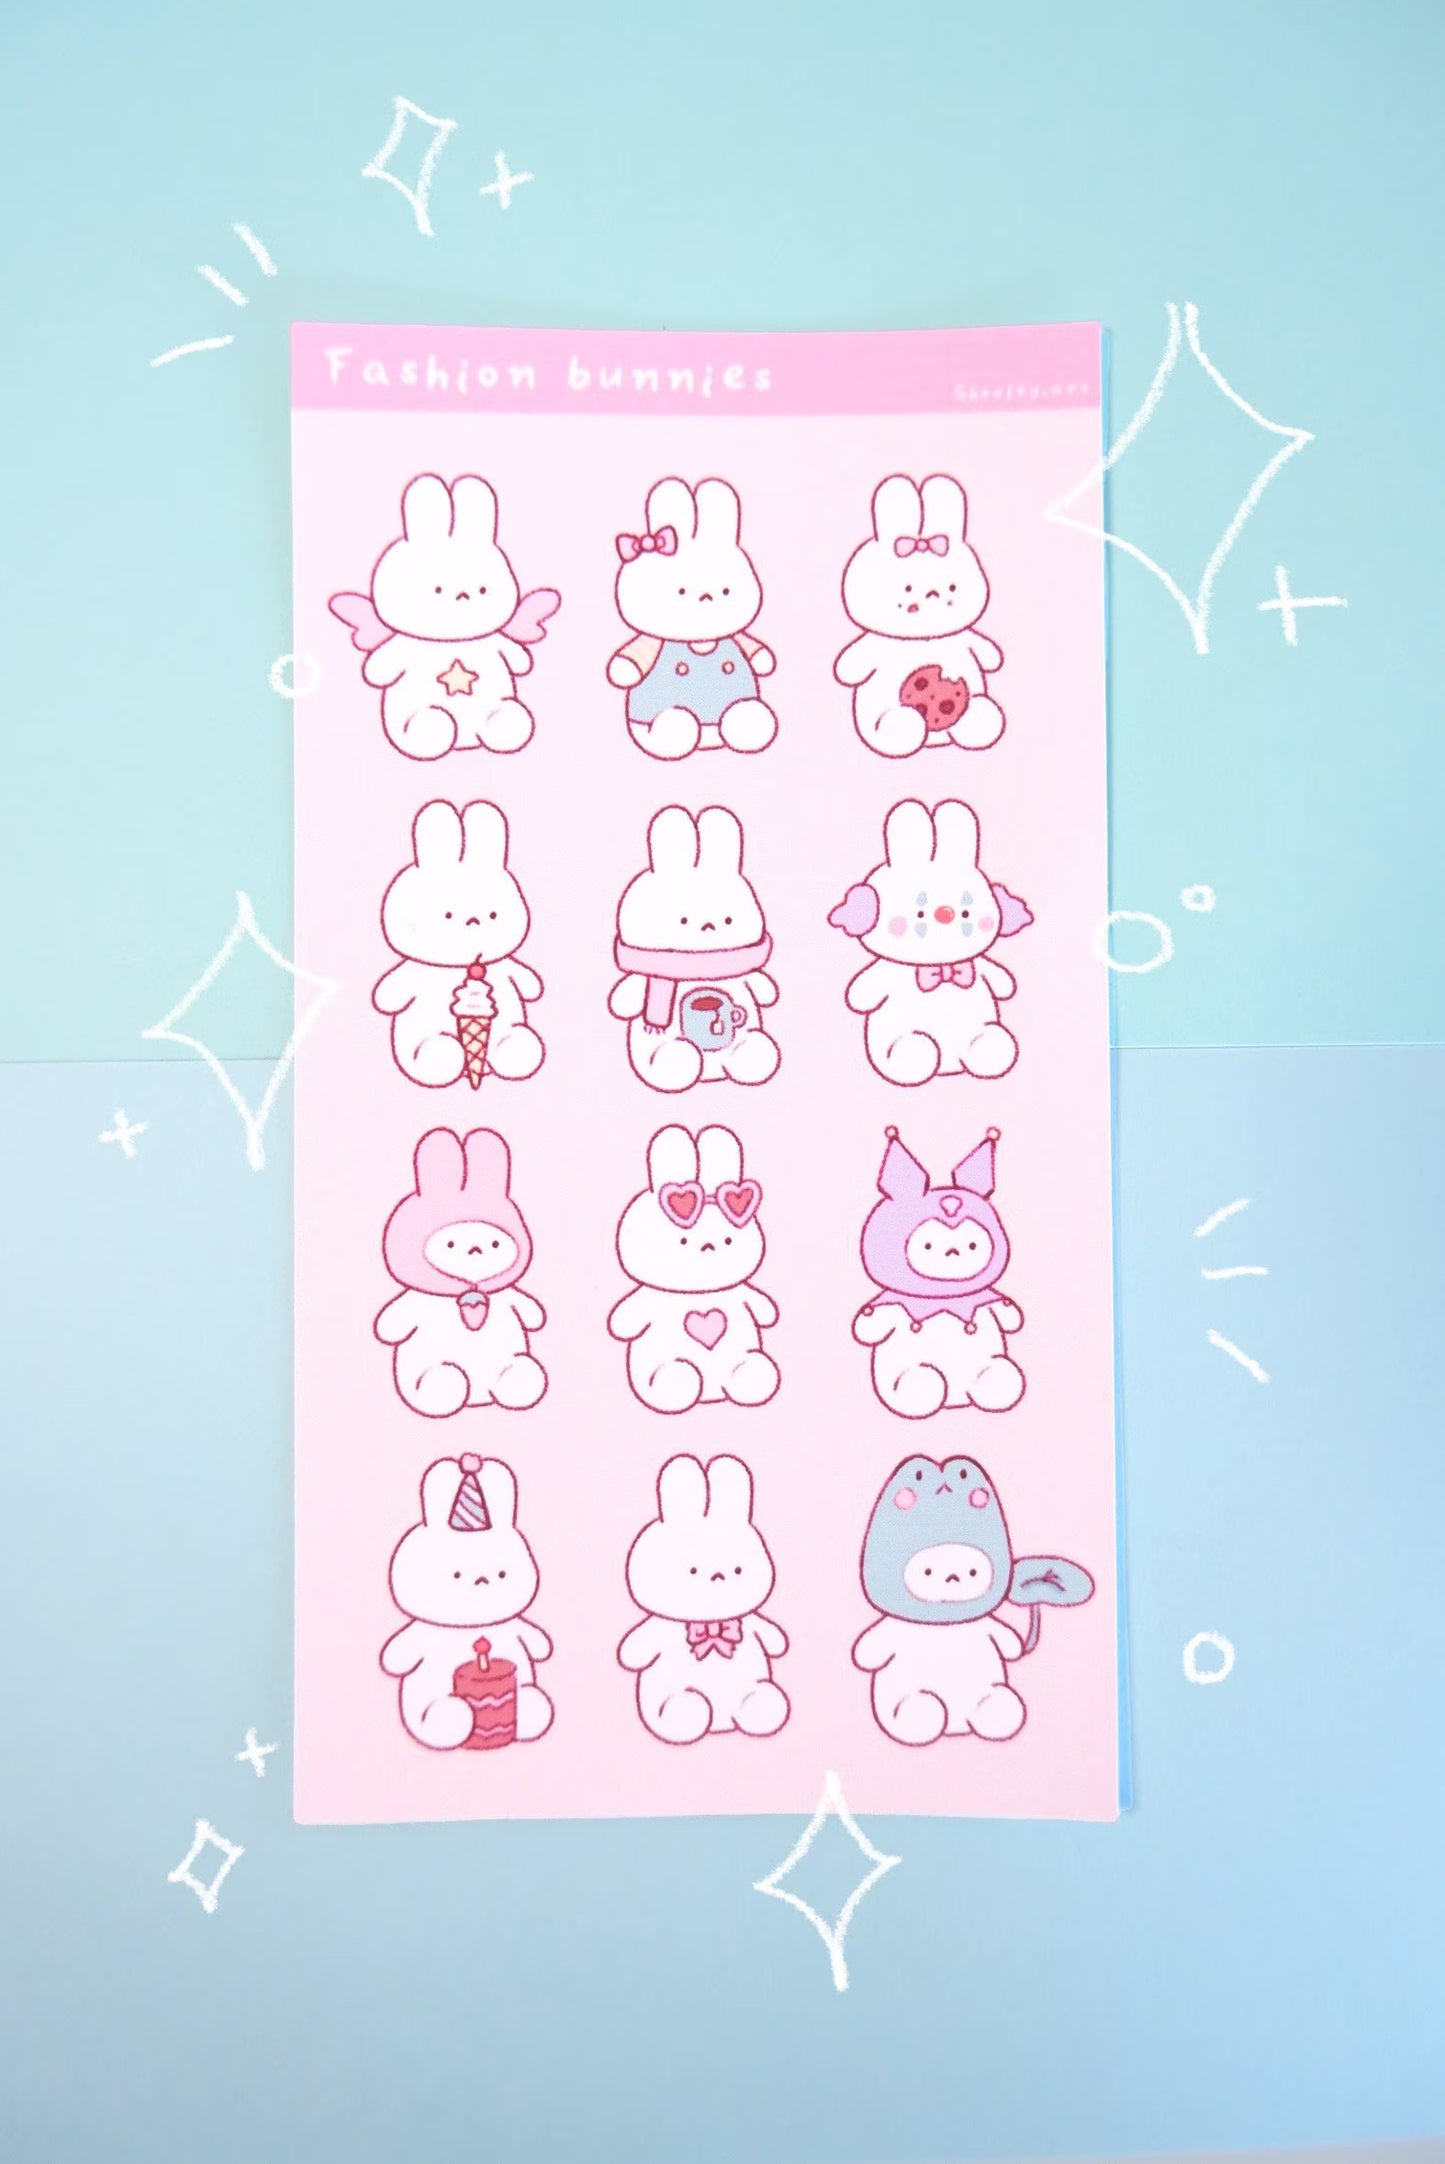 Fashion bunnies sticker sheet | Journal, planner, deco sticker sheet